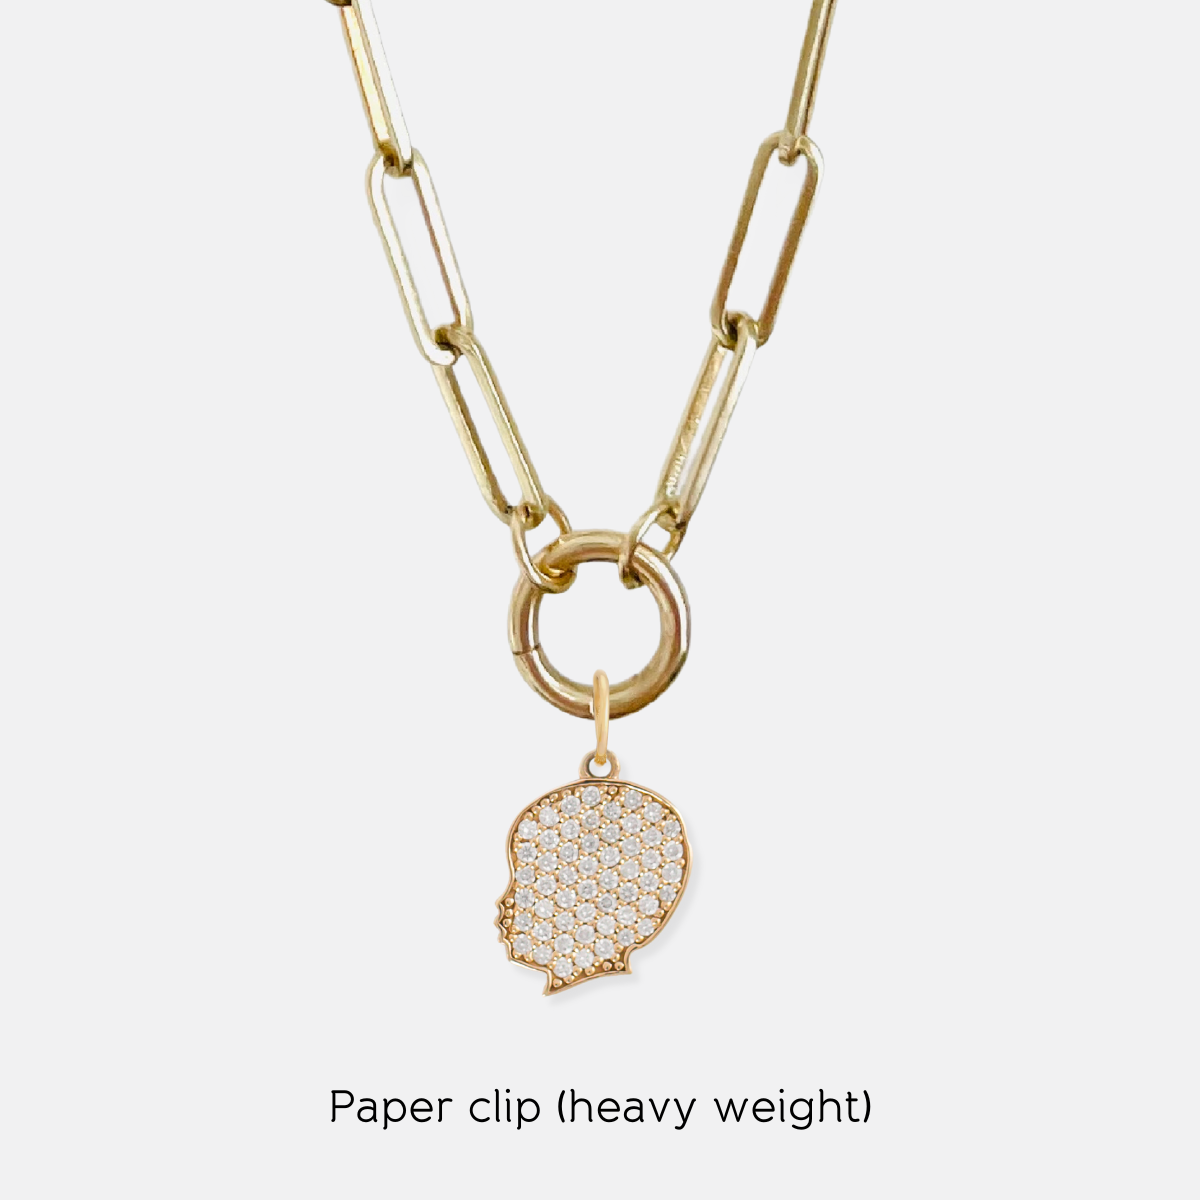 Build Your Own 14K Gold Pavé Diamond Silhouette Charm Necklace